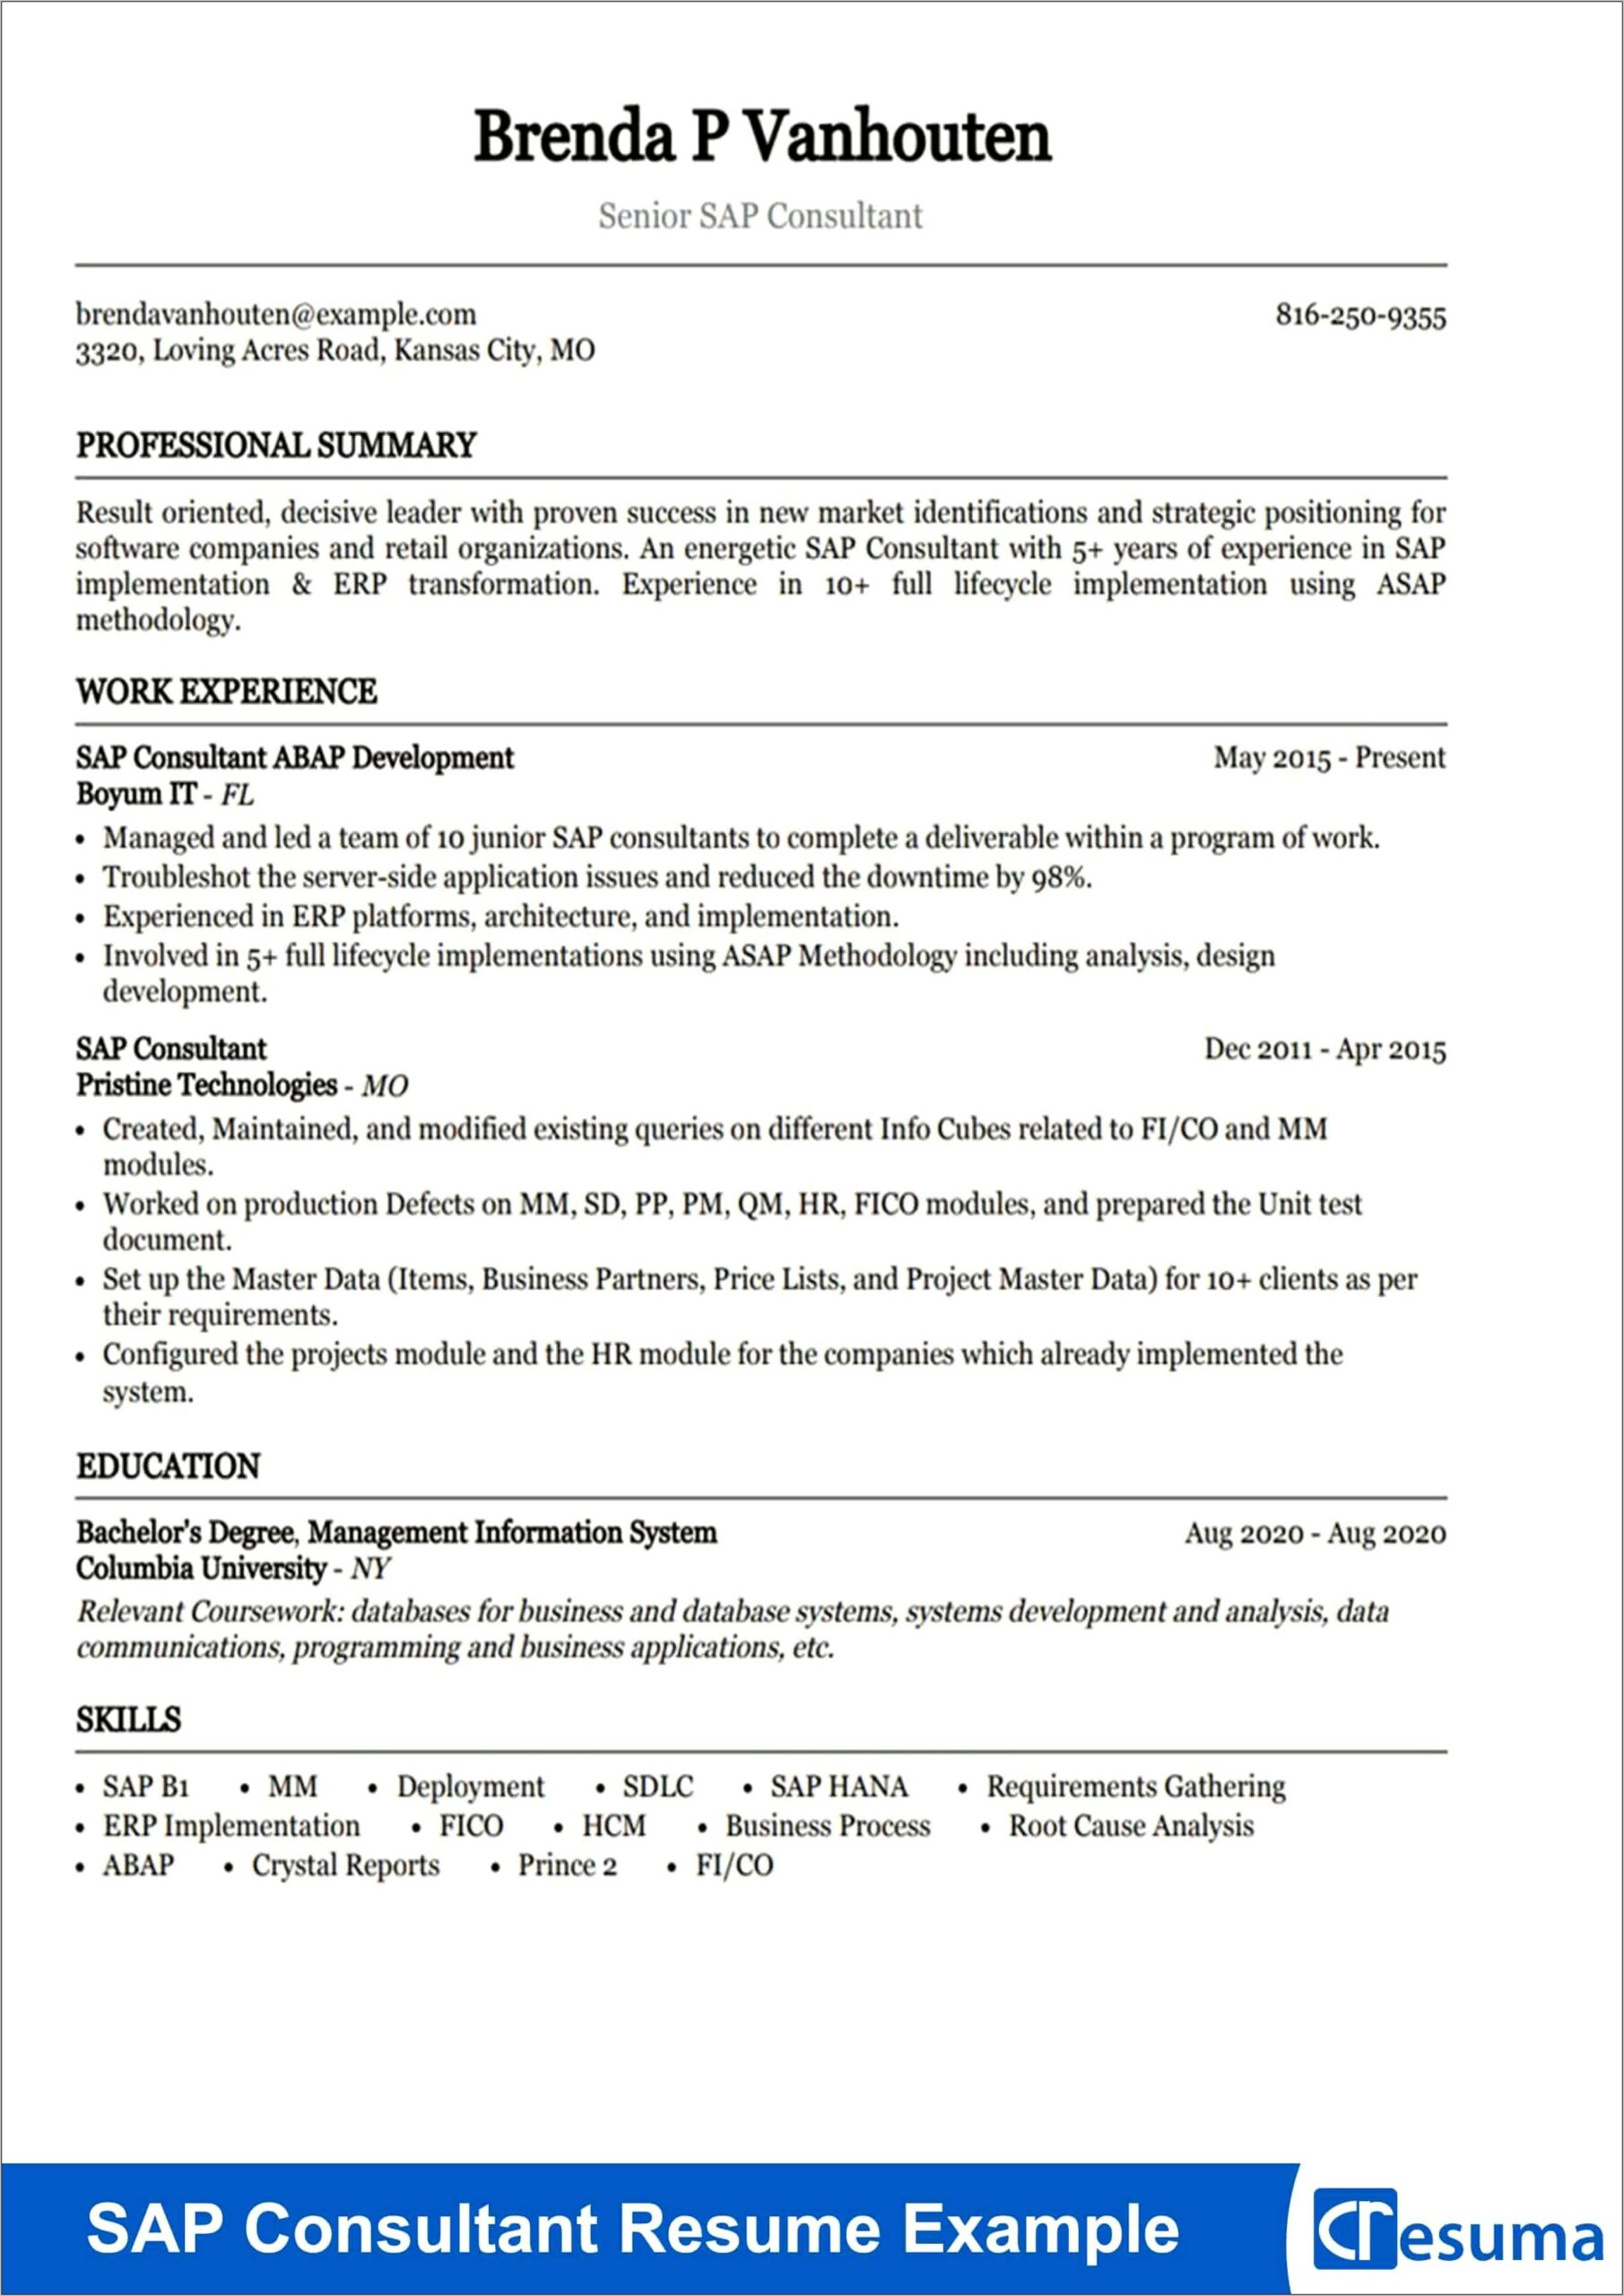 General Resume Career Summary Examples